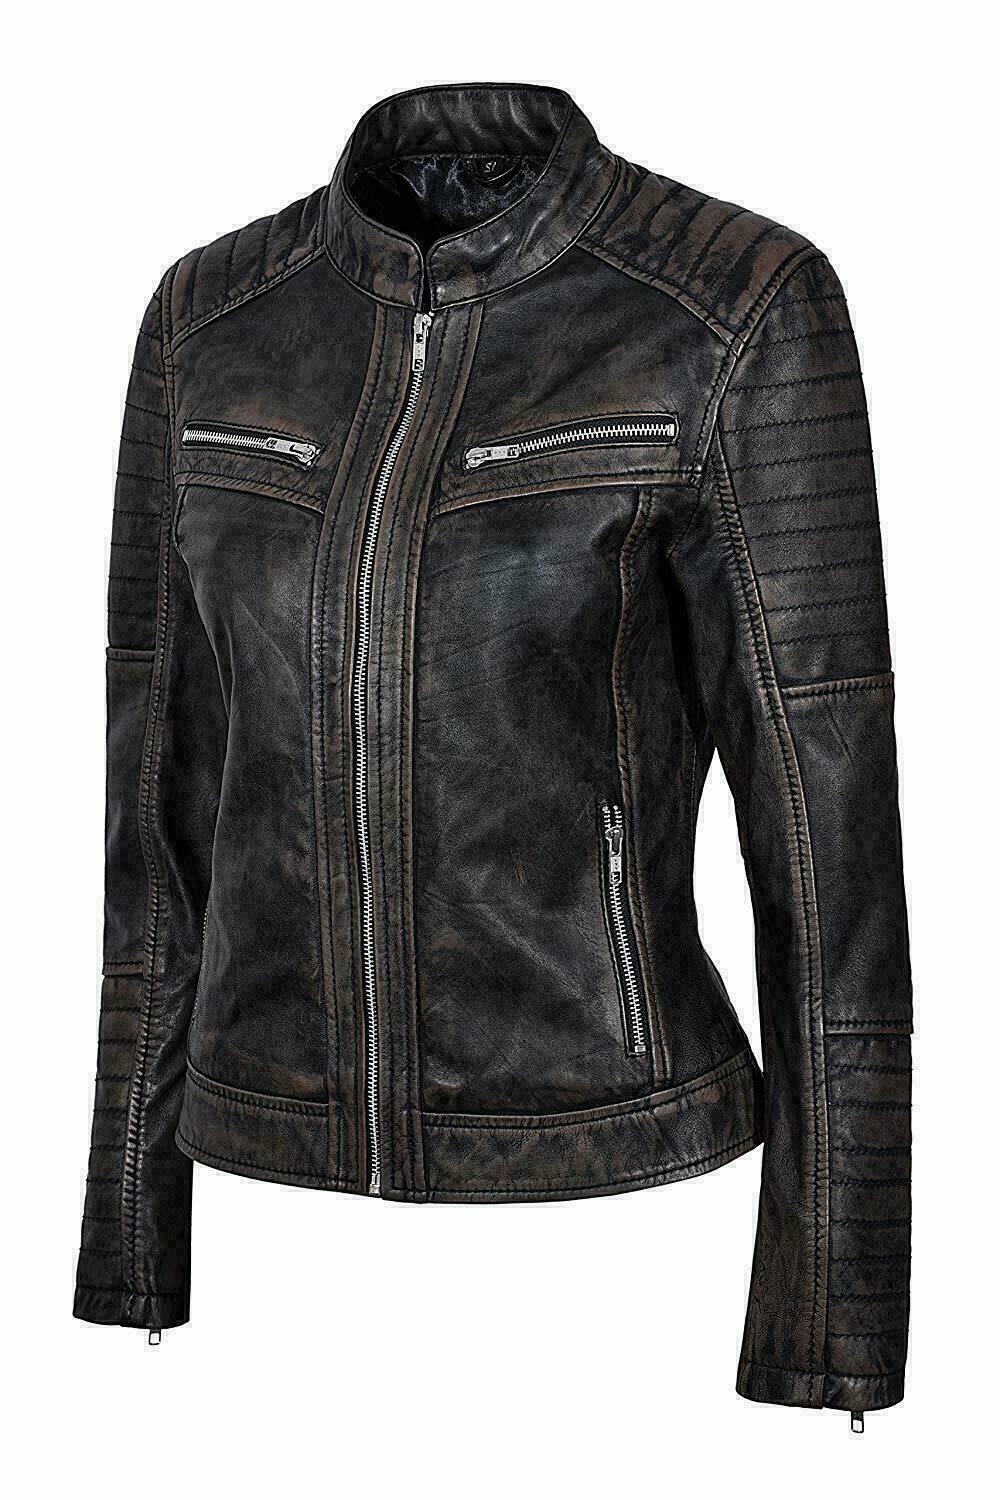 New Women's HM Genuine Lambskin Leather Jacket Black Slim fit Motorcycle Jacket